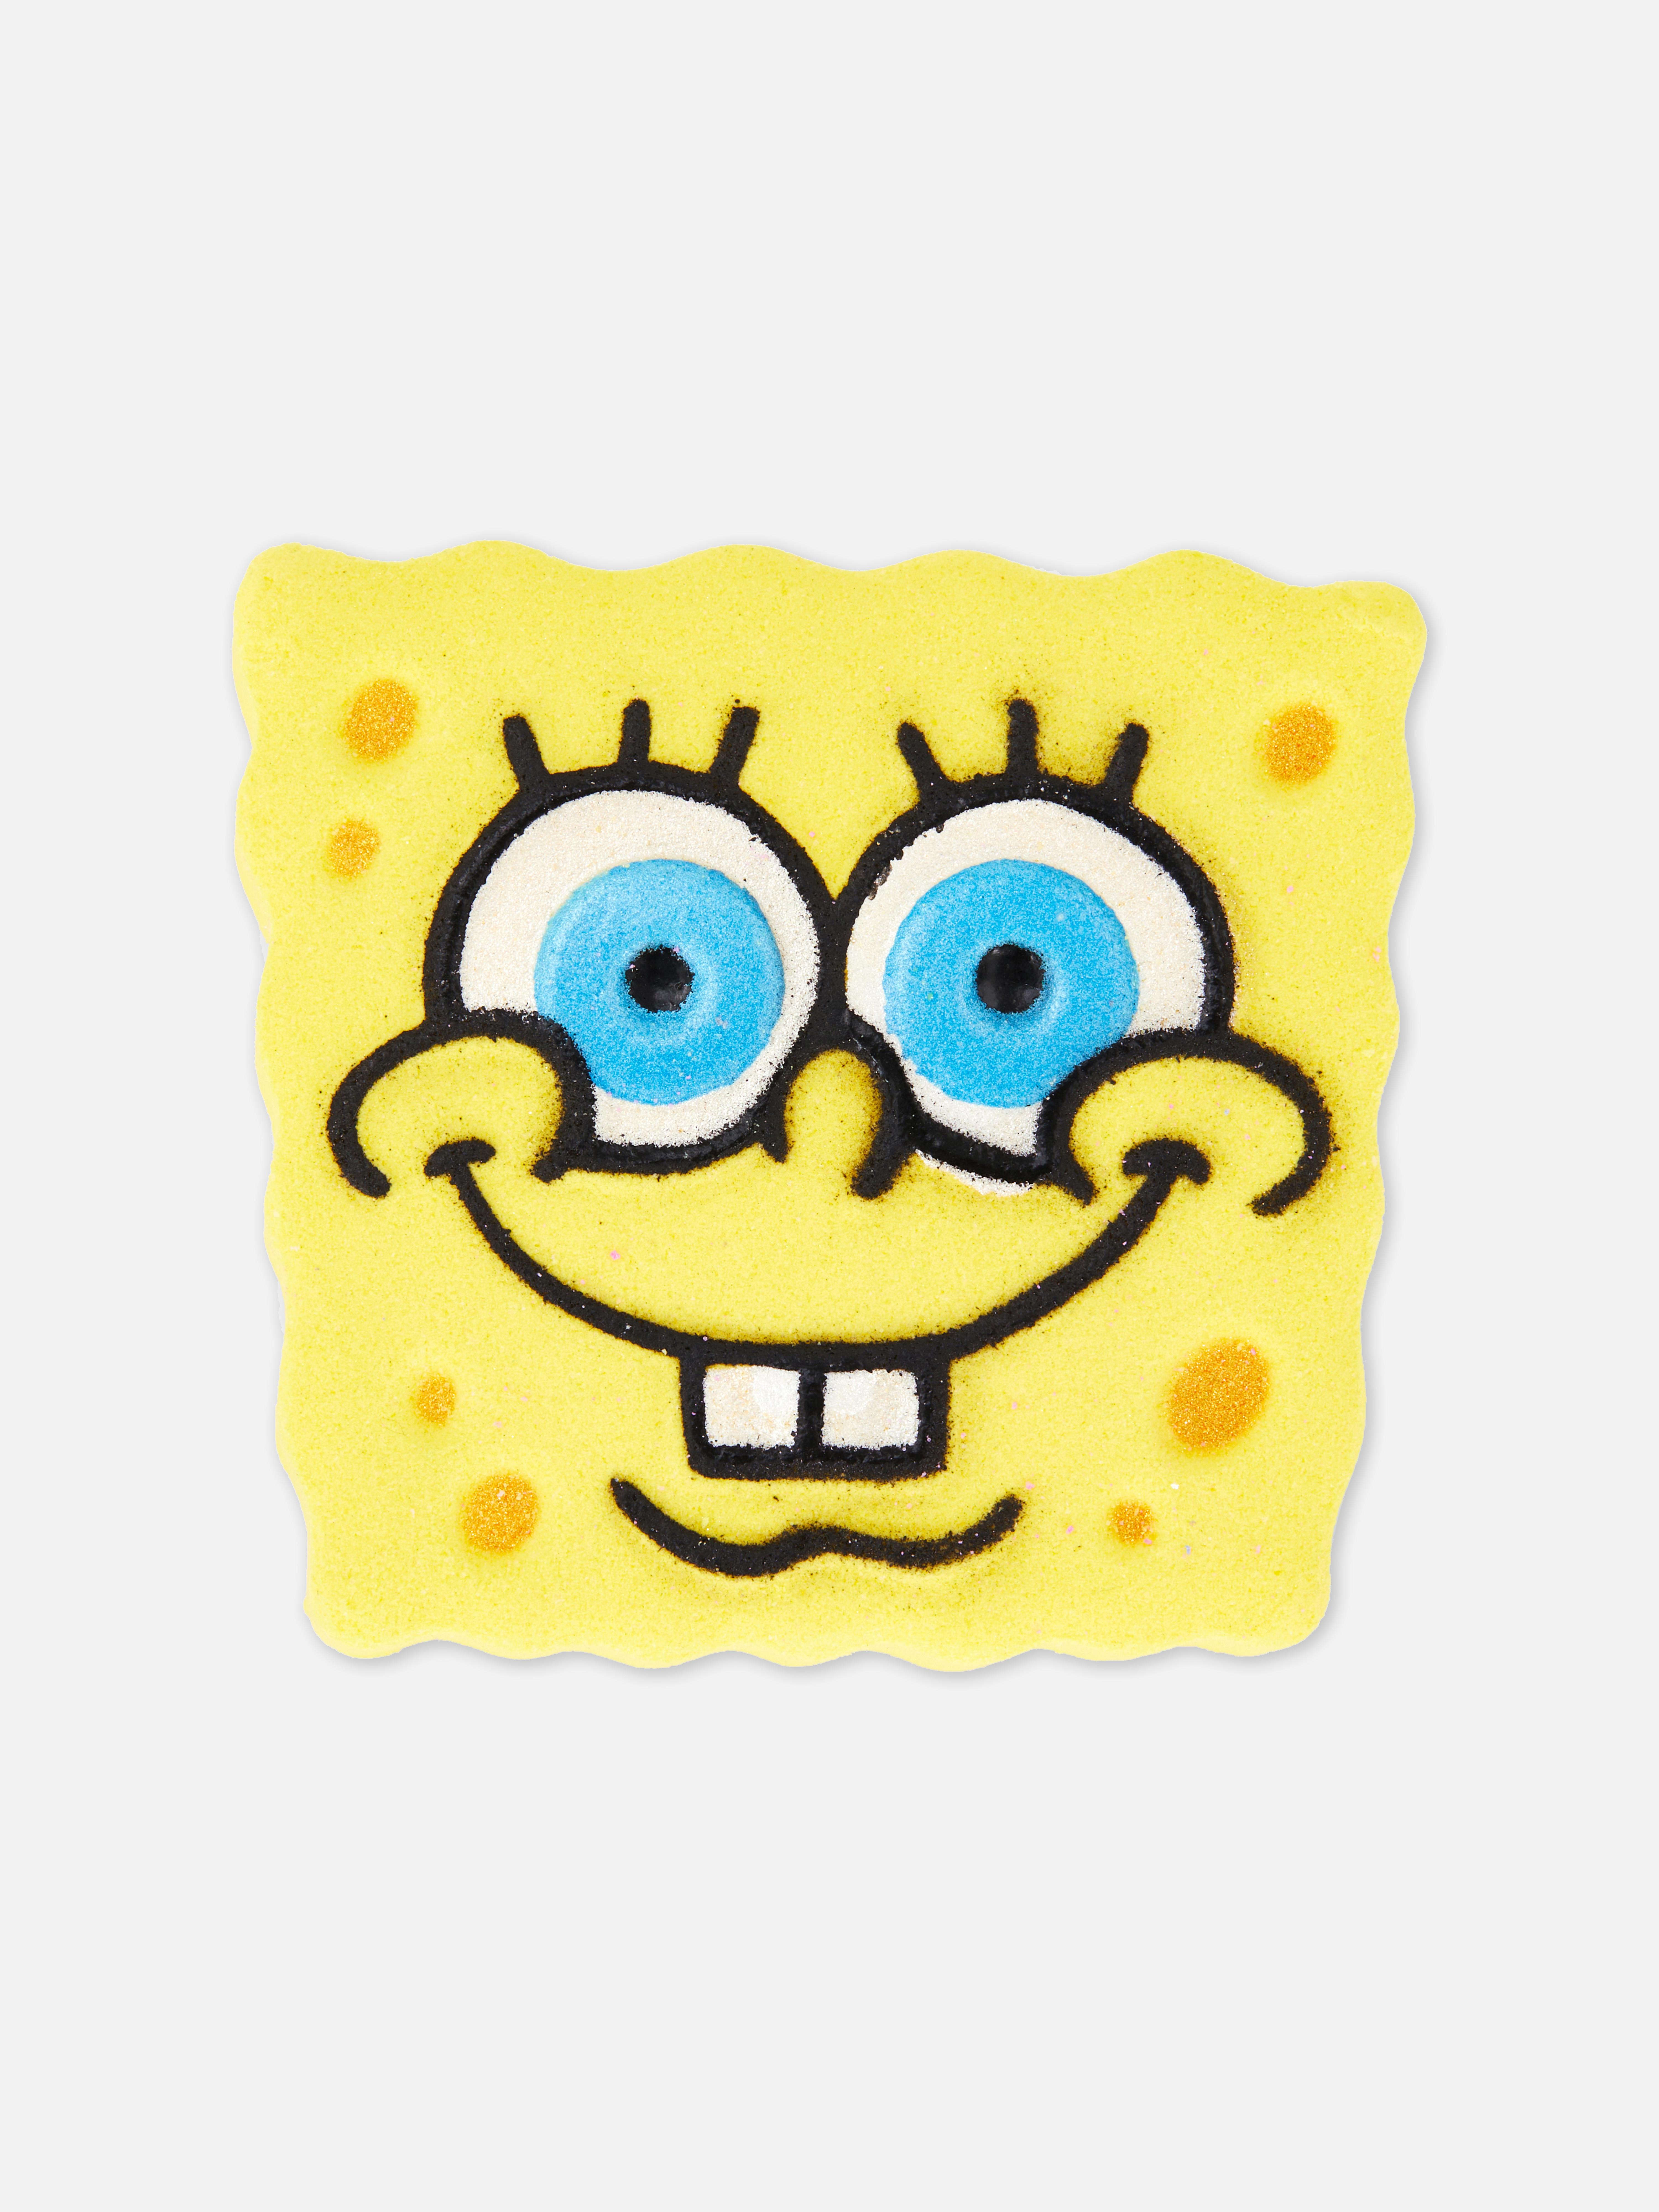 SpongeBob SquarePants Bath Fizzers